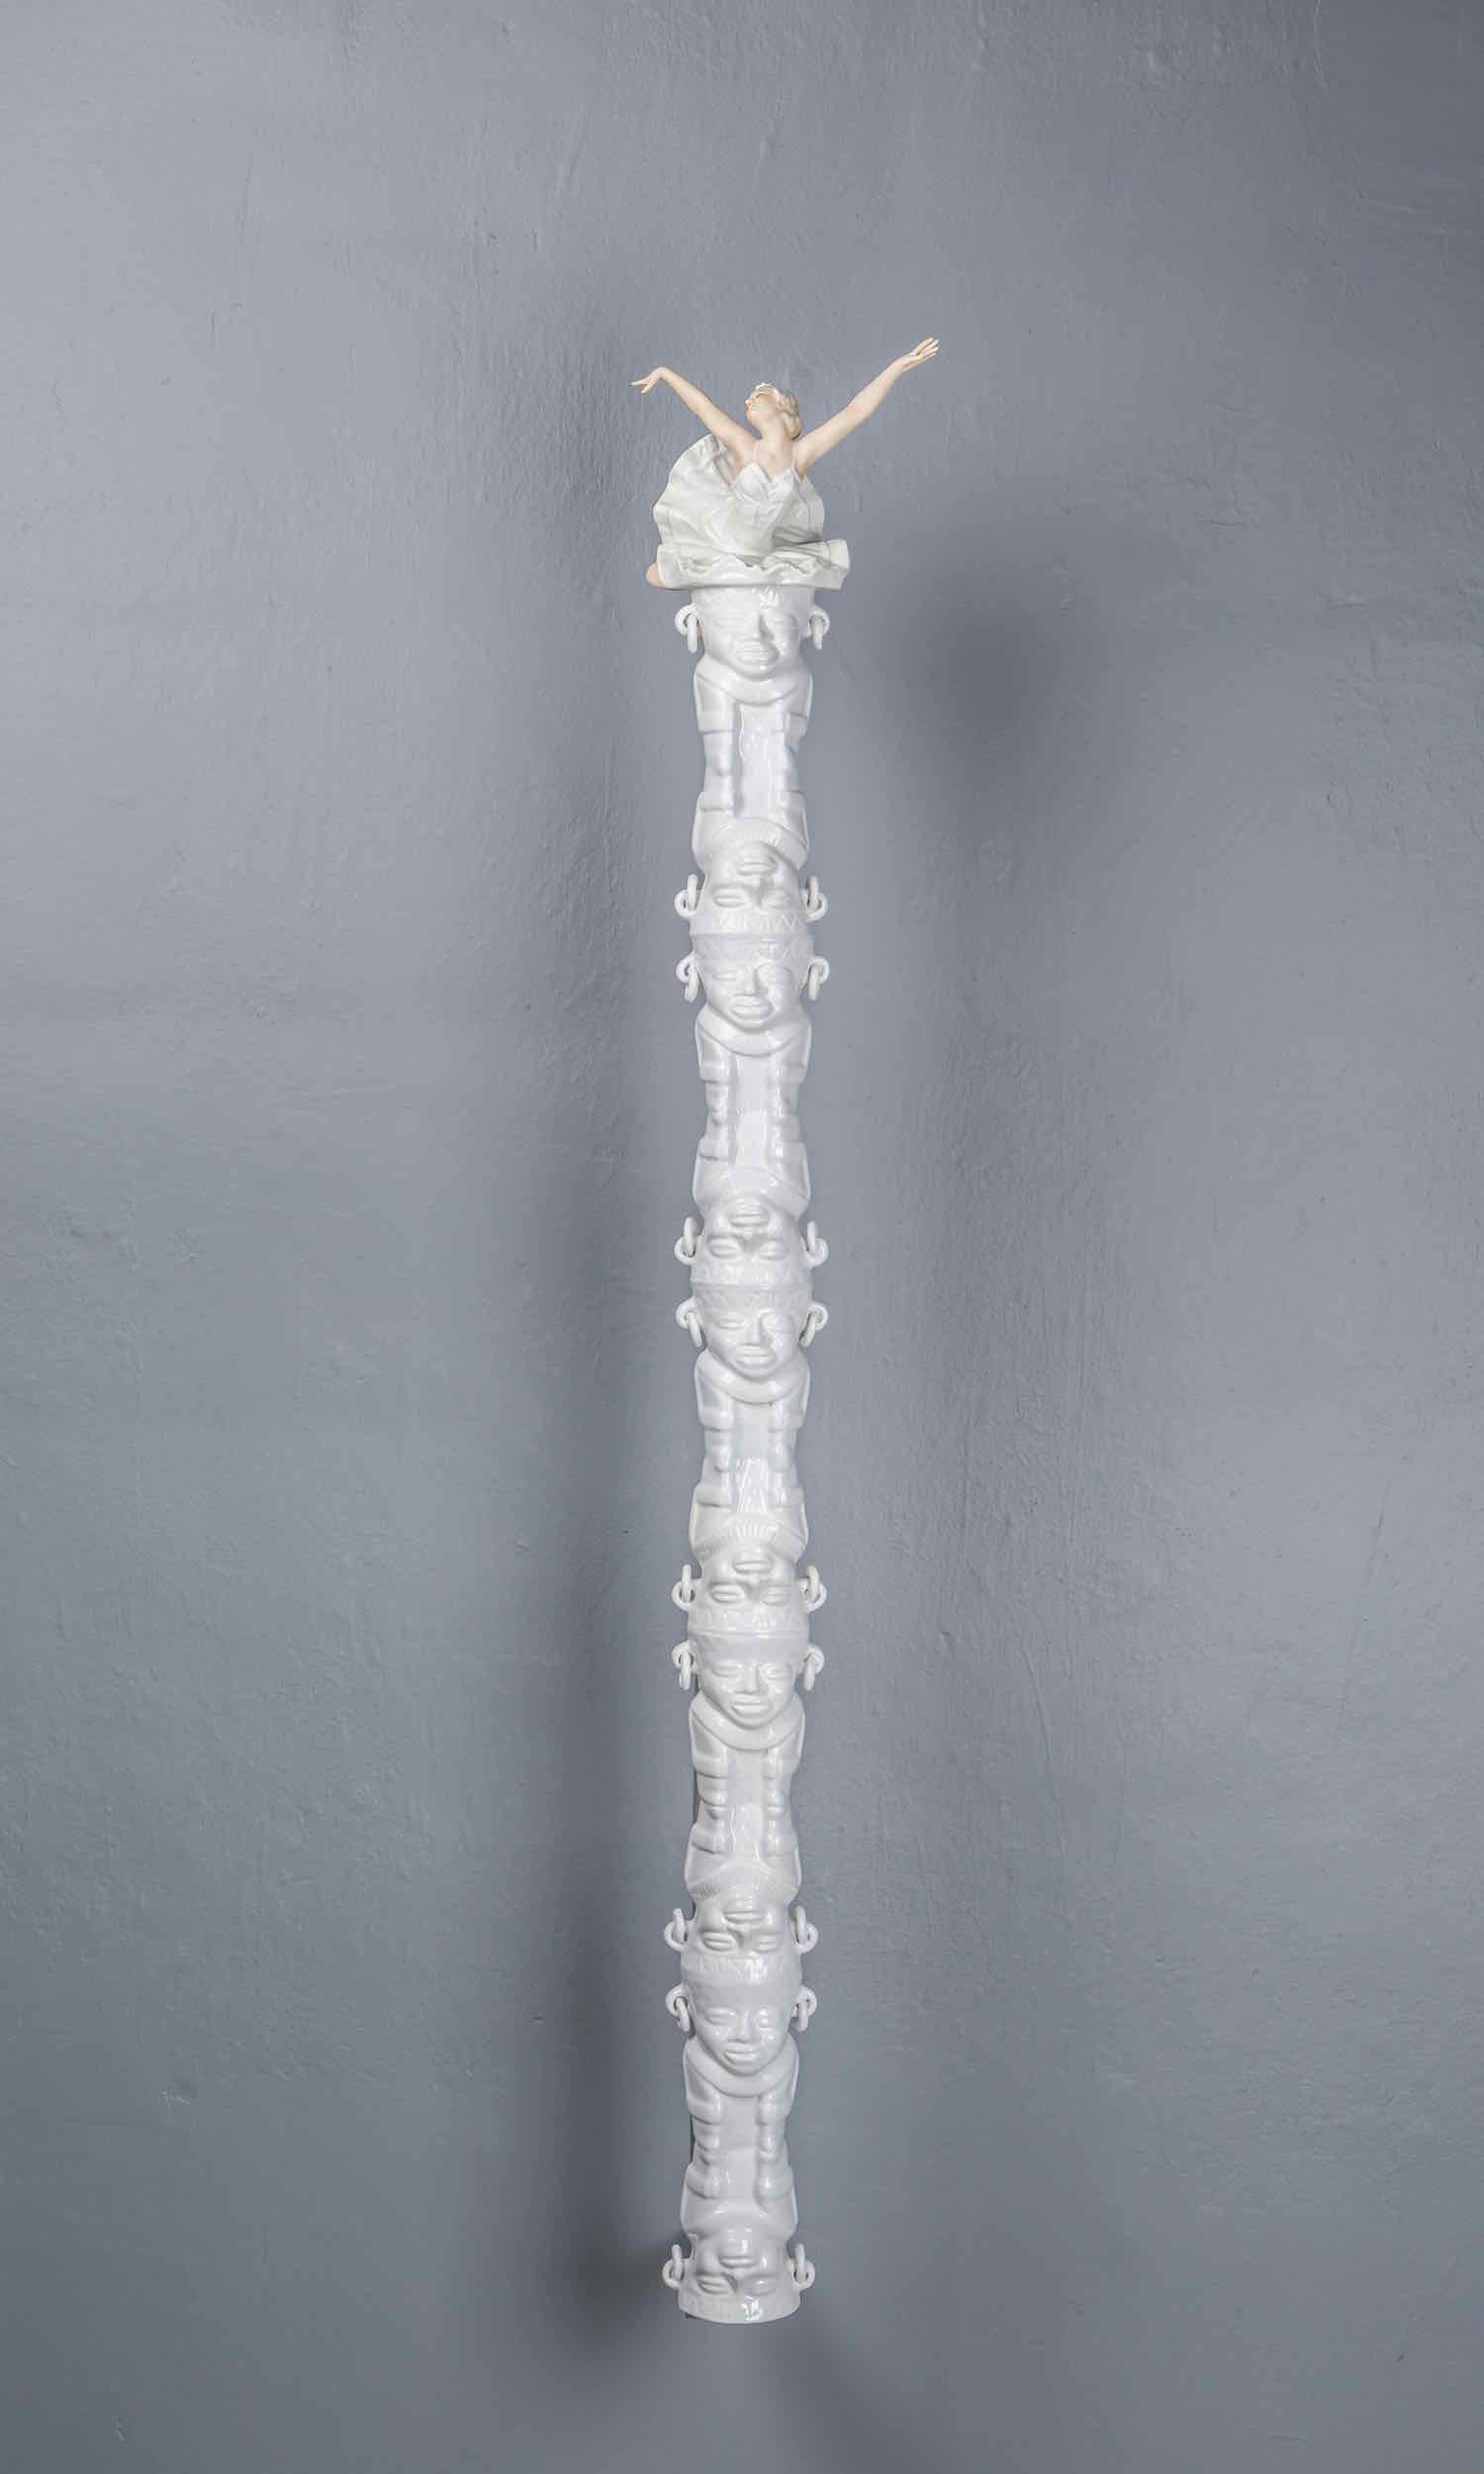   Tunjos y porcelanas   Cerámica y porcelana&nbsp; &nbsp; &nbsp; &nbsp; 67 x 25 cm.&nbsp; 2016    